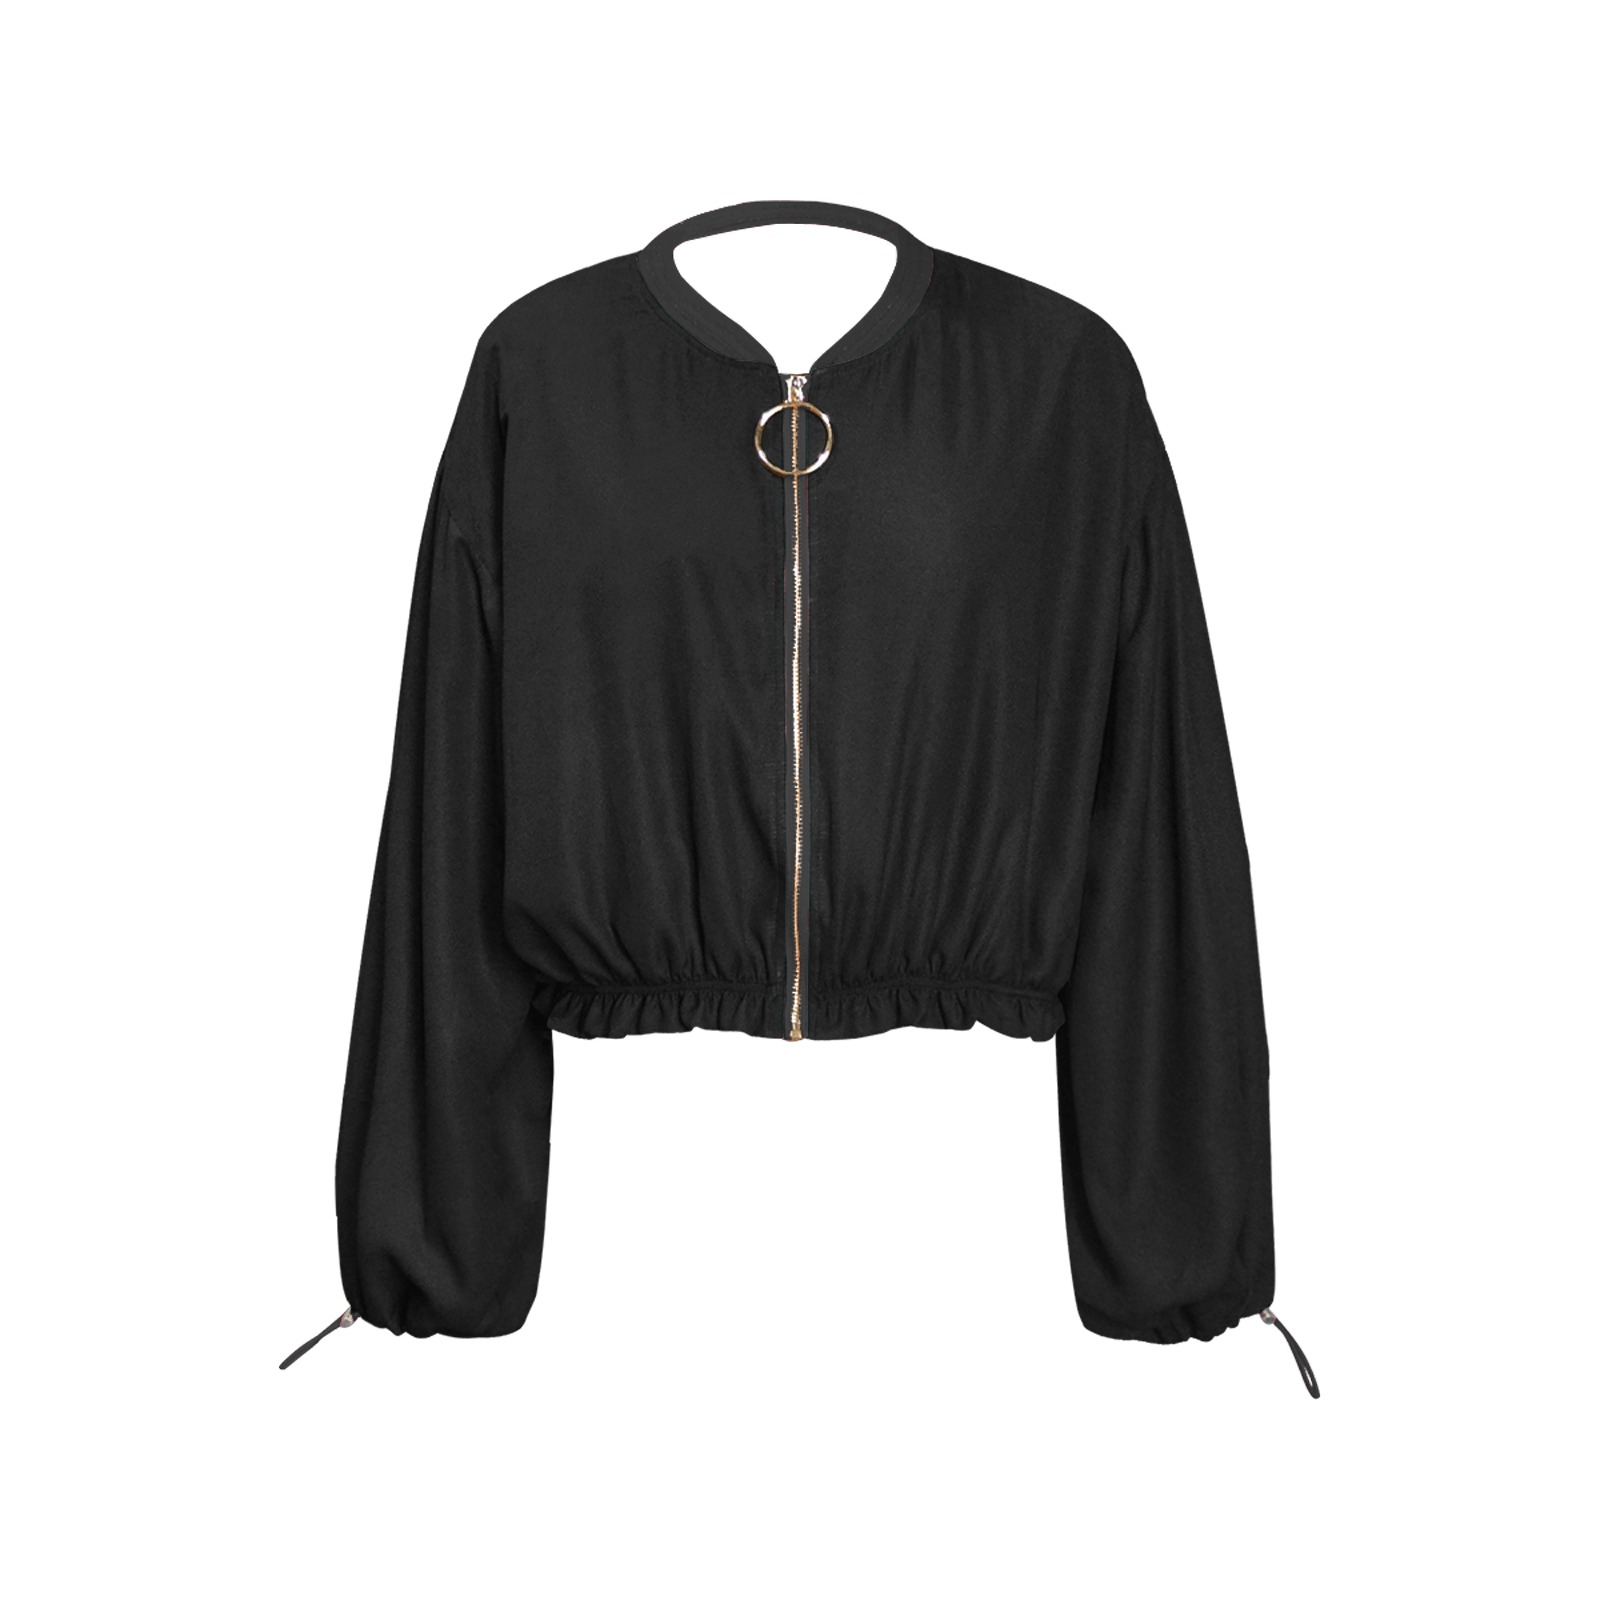 fashion Woman Cropped Chiffon Jacket for Women (Model H30)